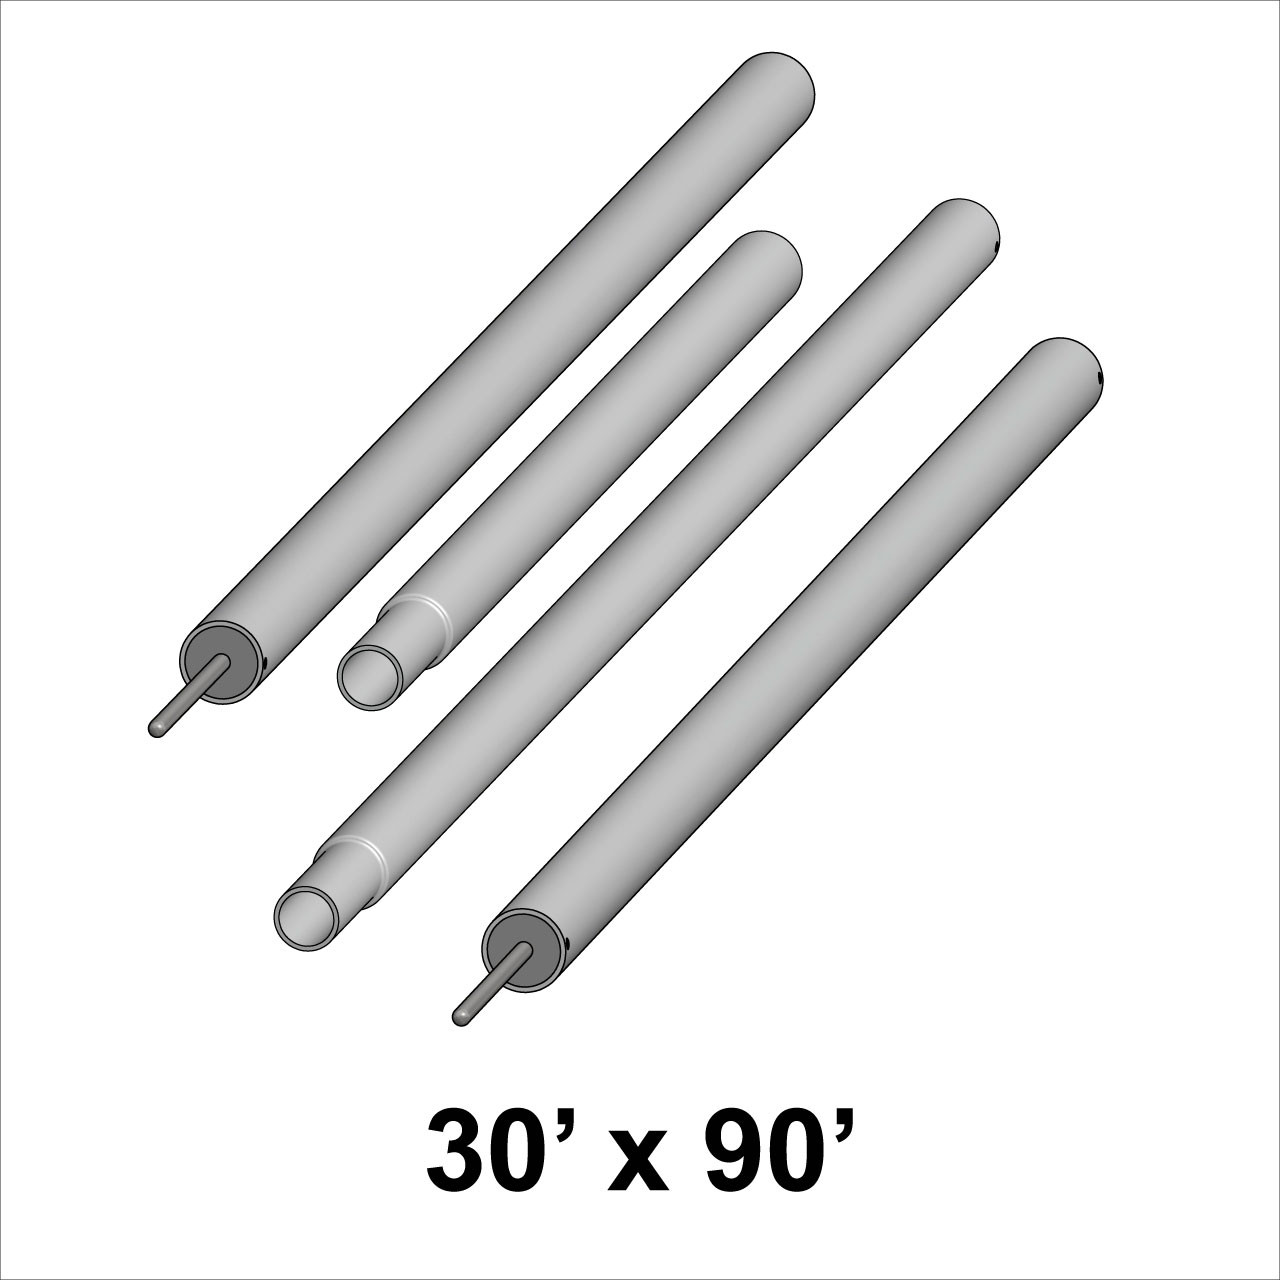 30' x 90' Classic Series Pole Kit